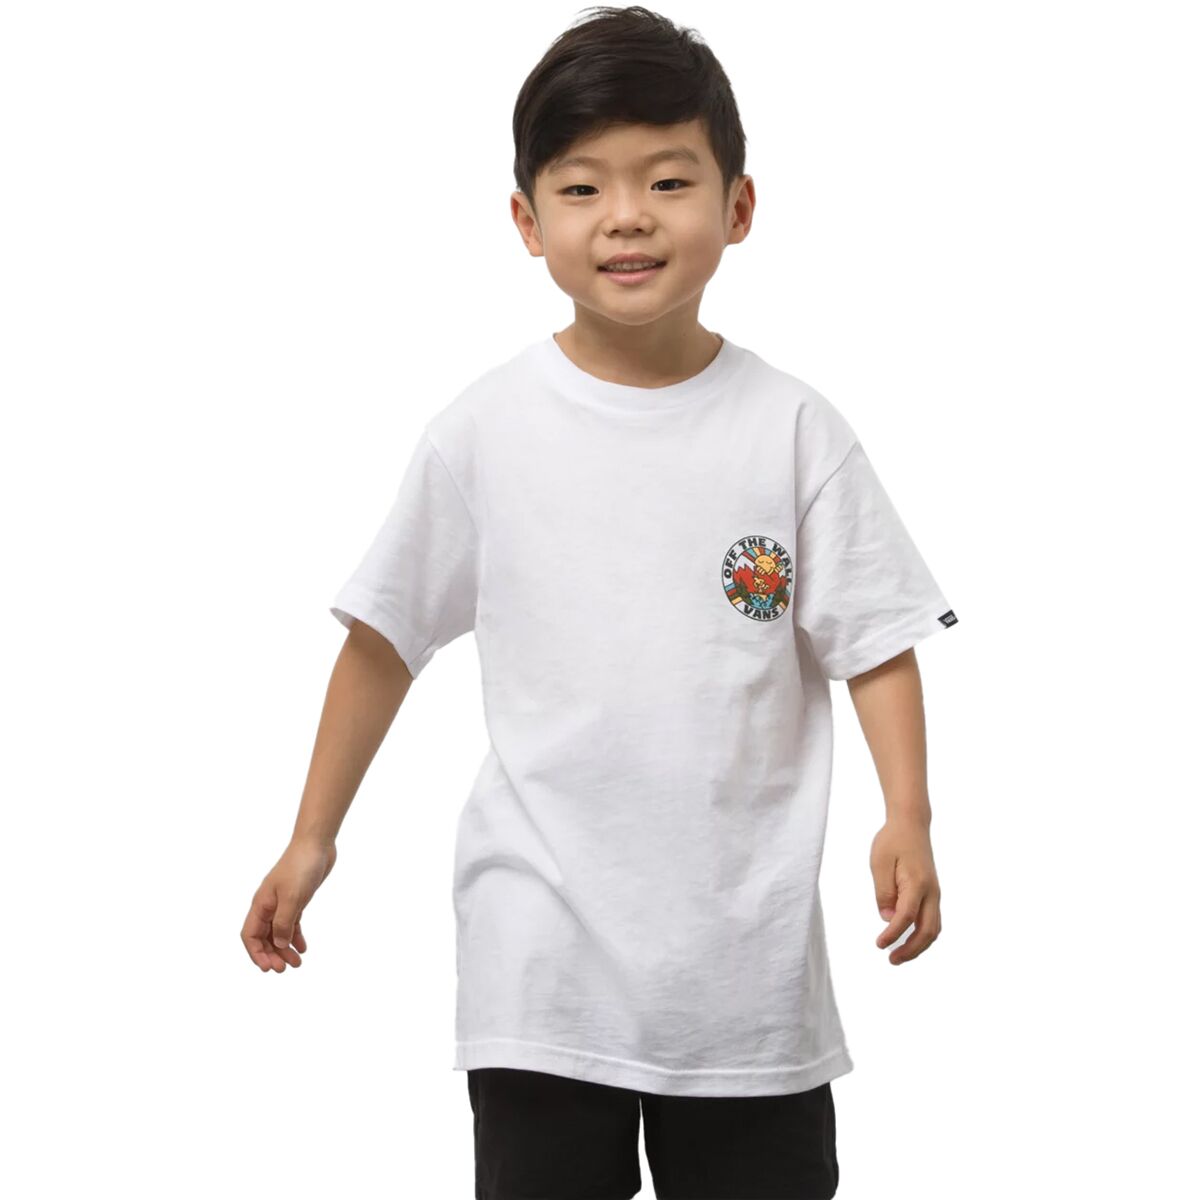 Vans Mountain Sk8 Short-Sleeve Shirt - Toddler Boys'